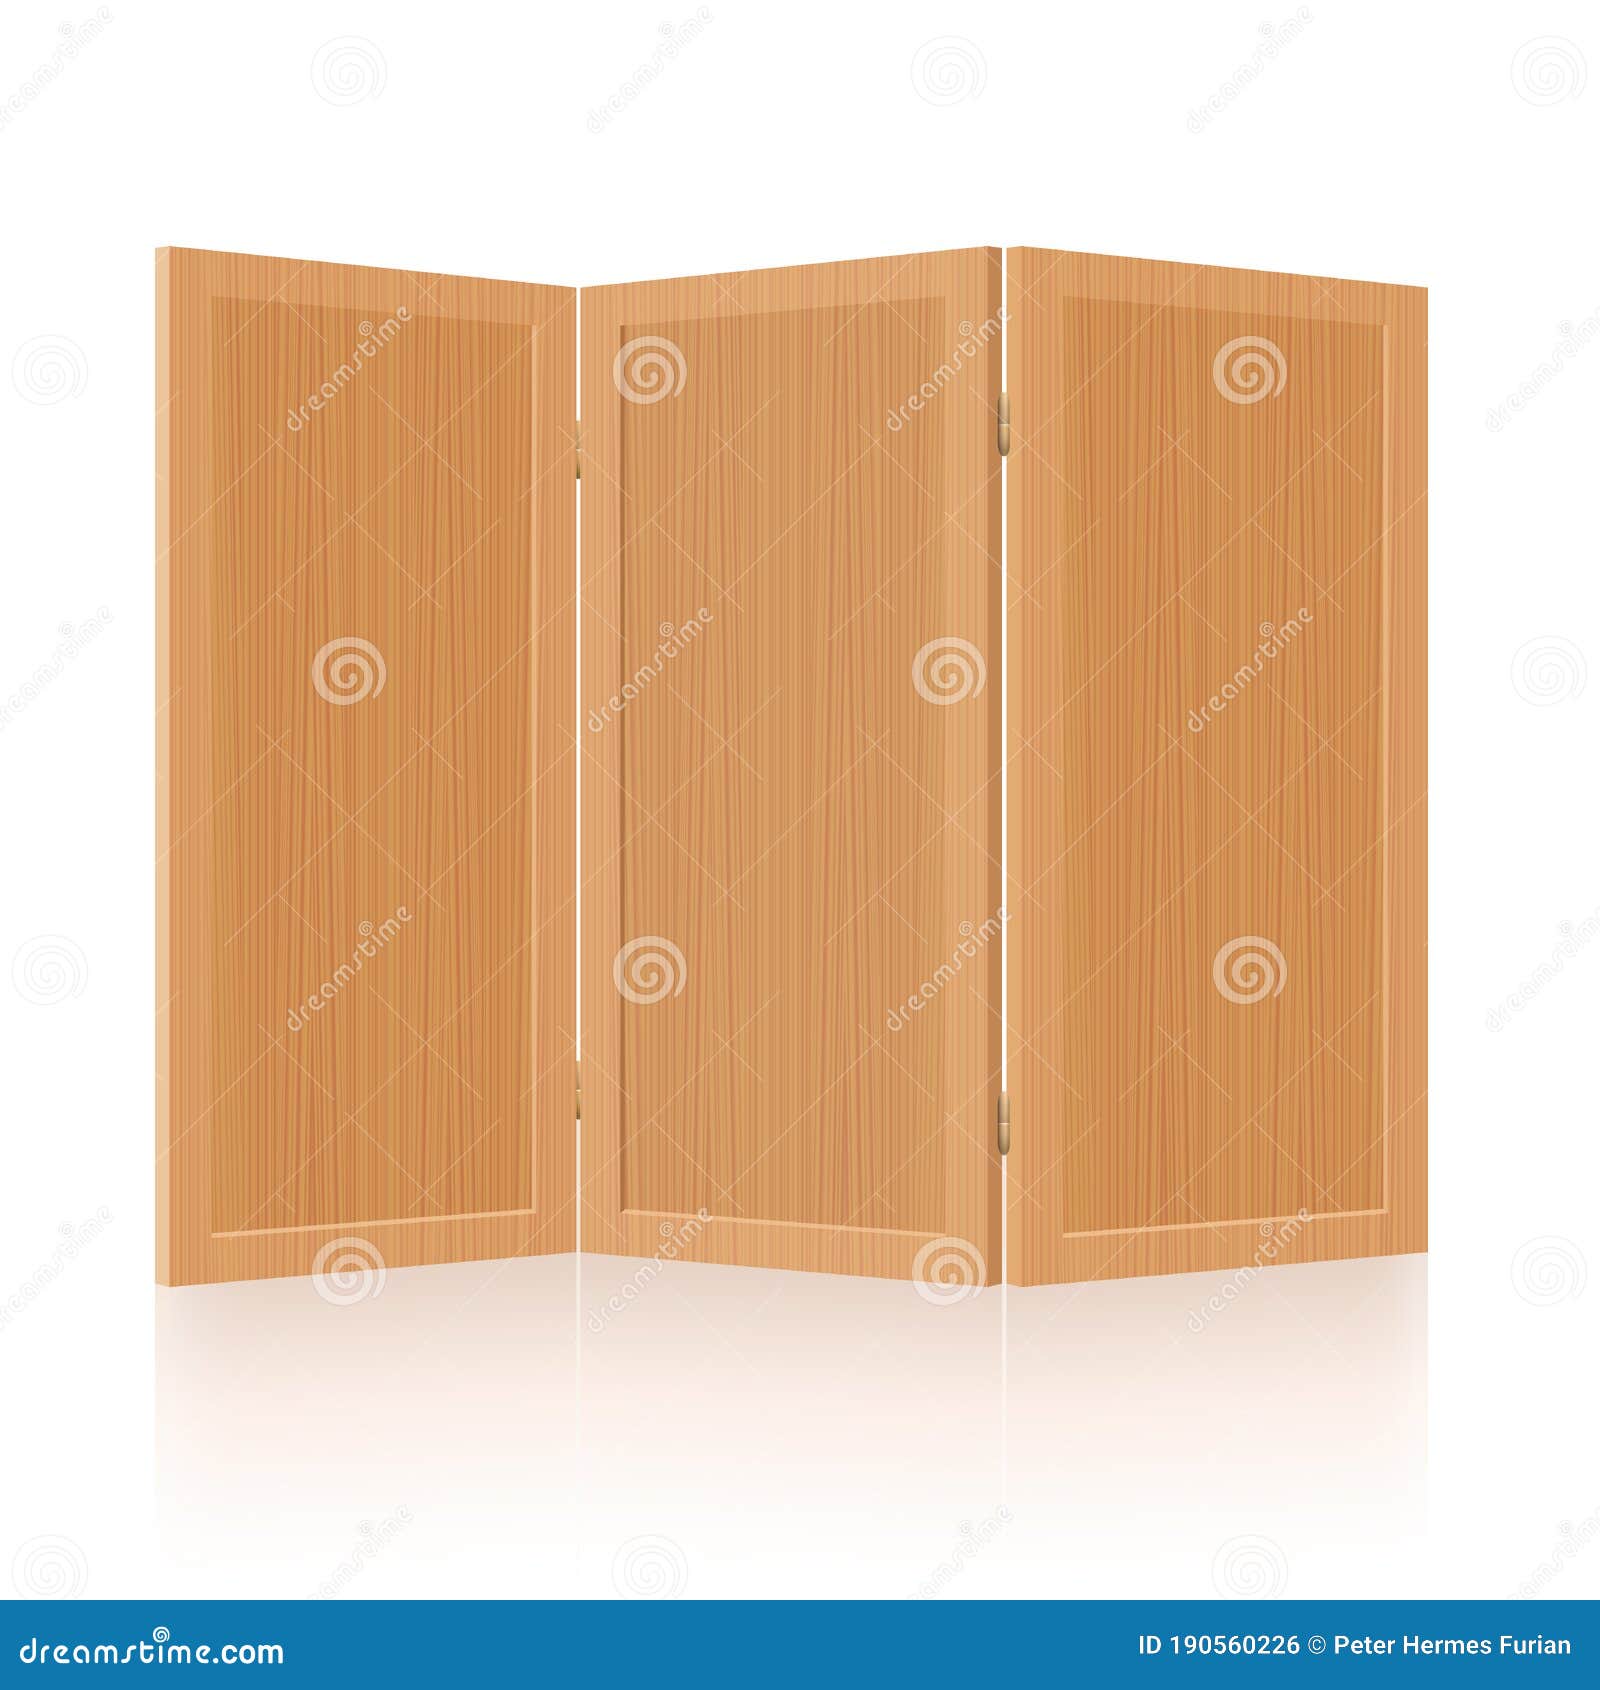 partition folding screen wooden room divider furniture